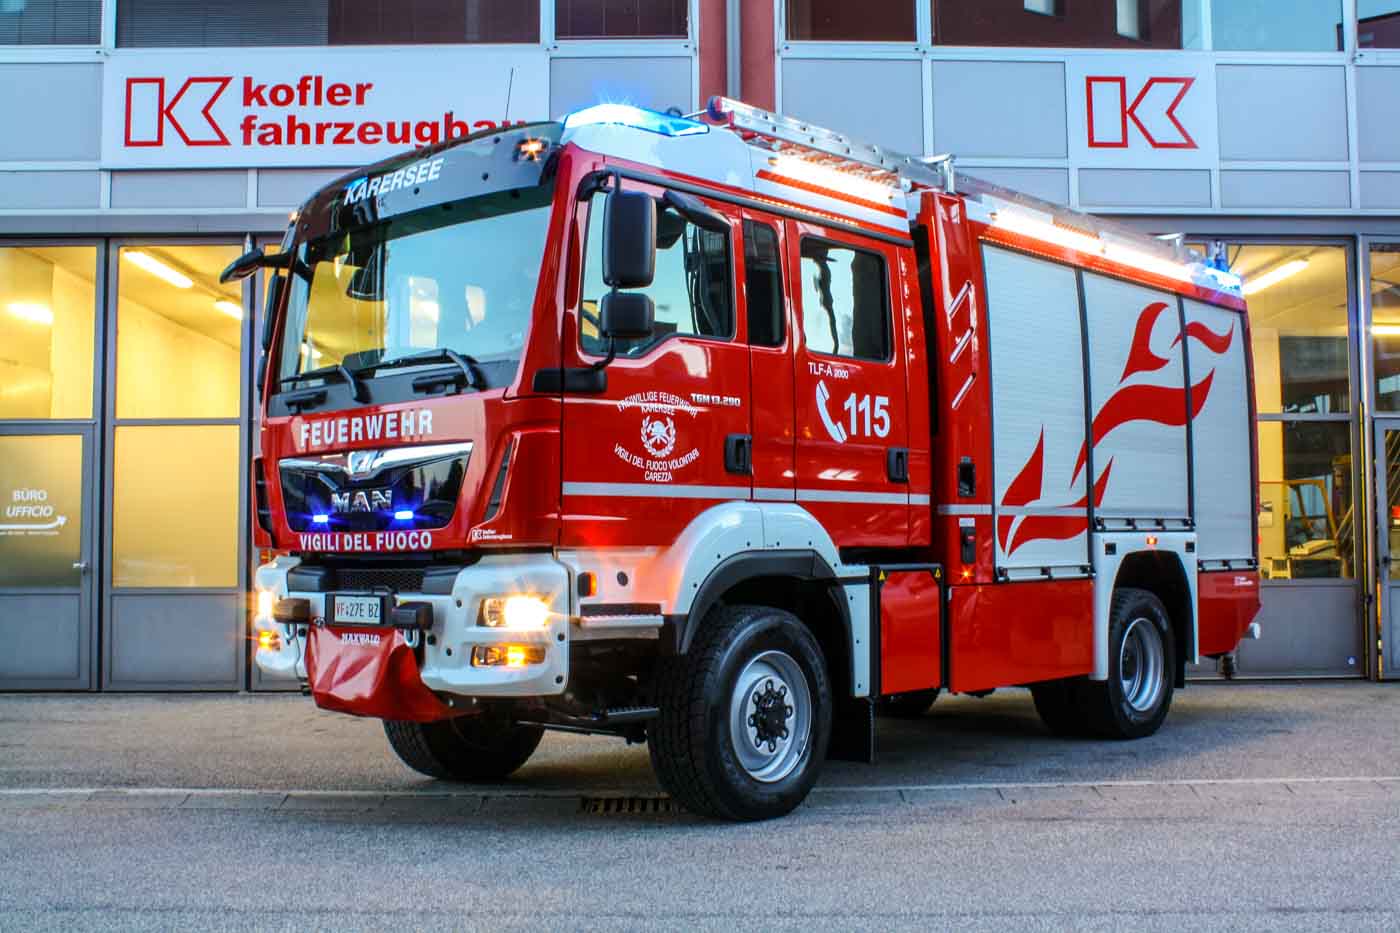 FF-Karersee-Kofler-Fahrzeugbau